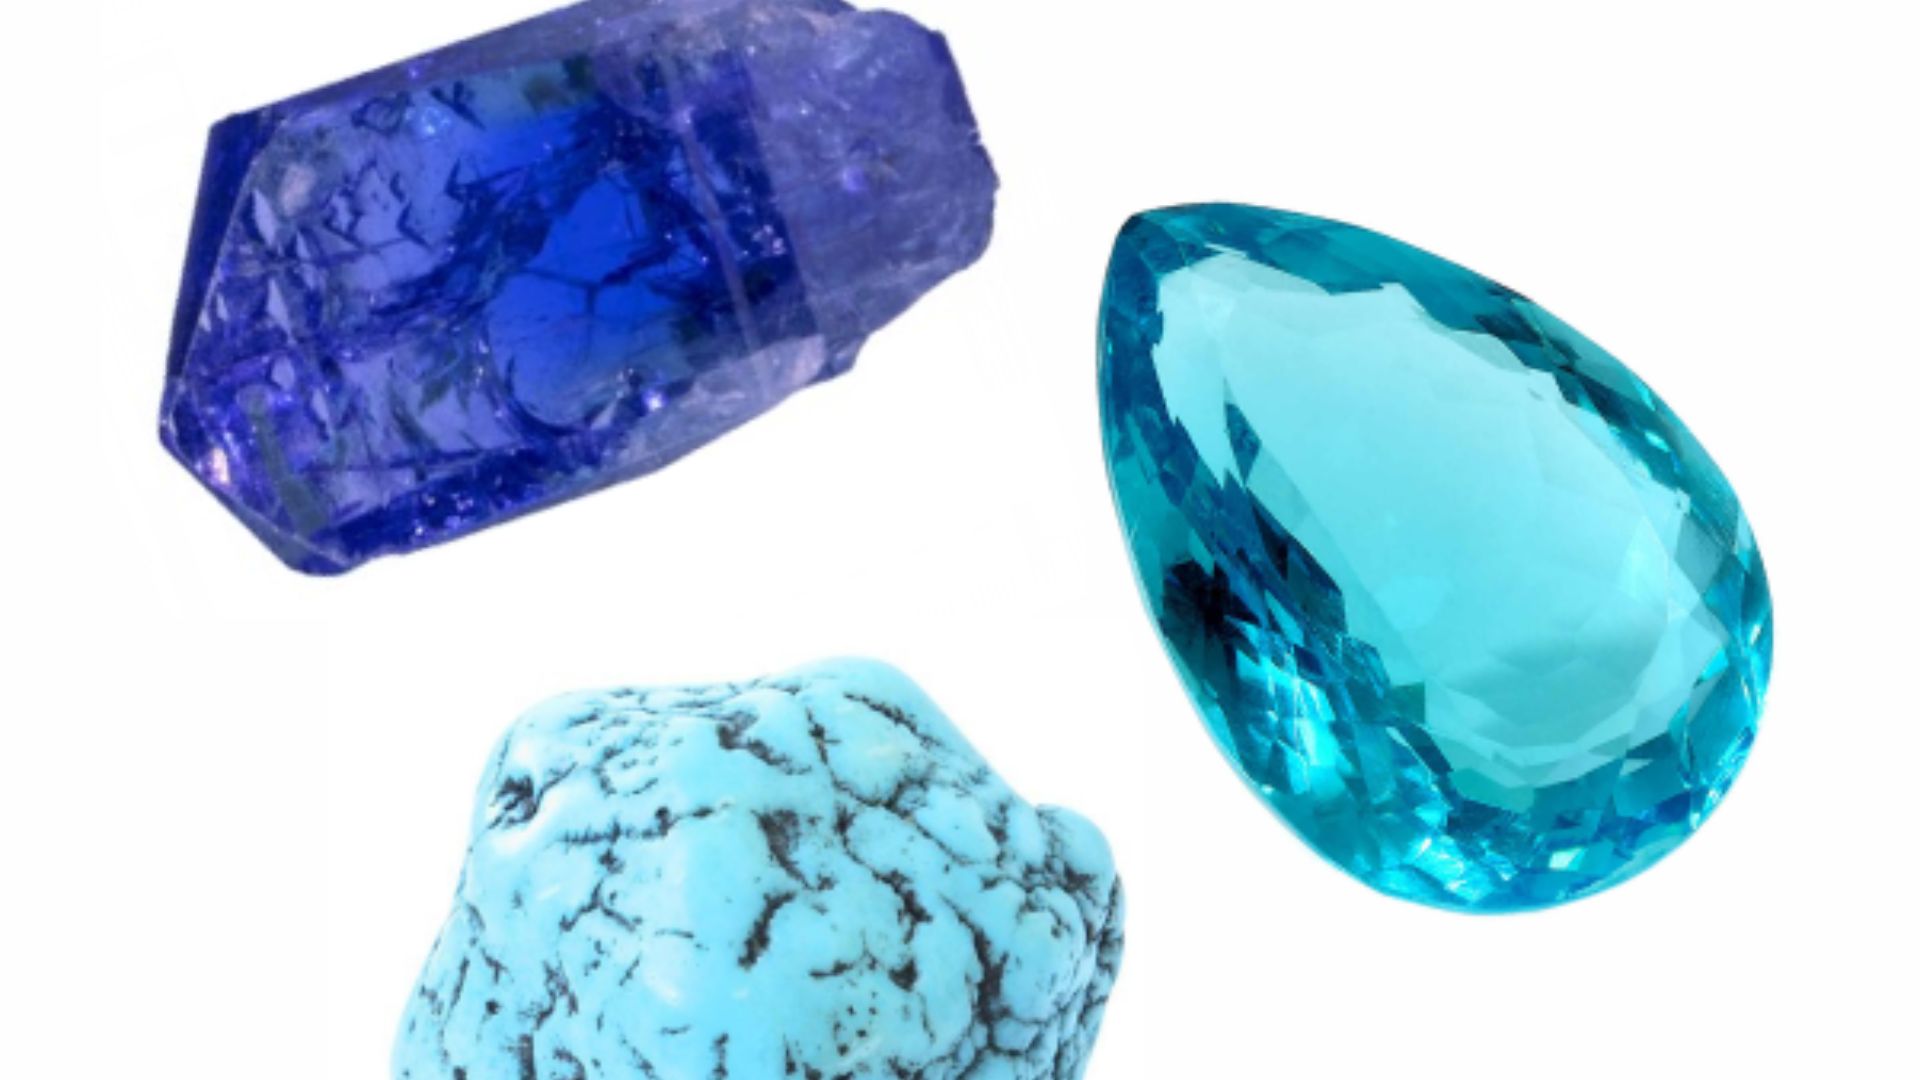  All Three Tanzanite, Zircon, and Turquoise Gemstones